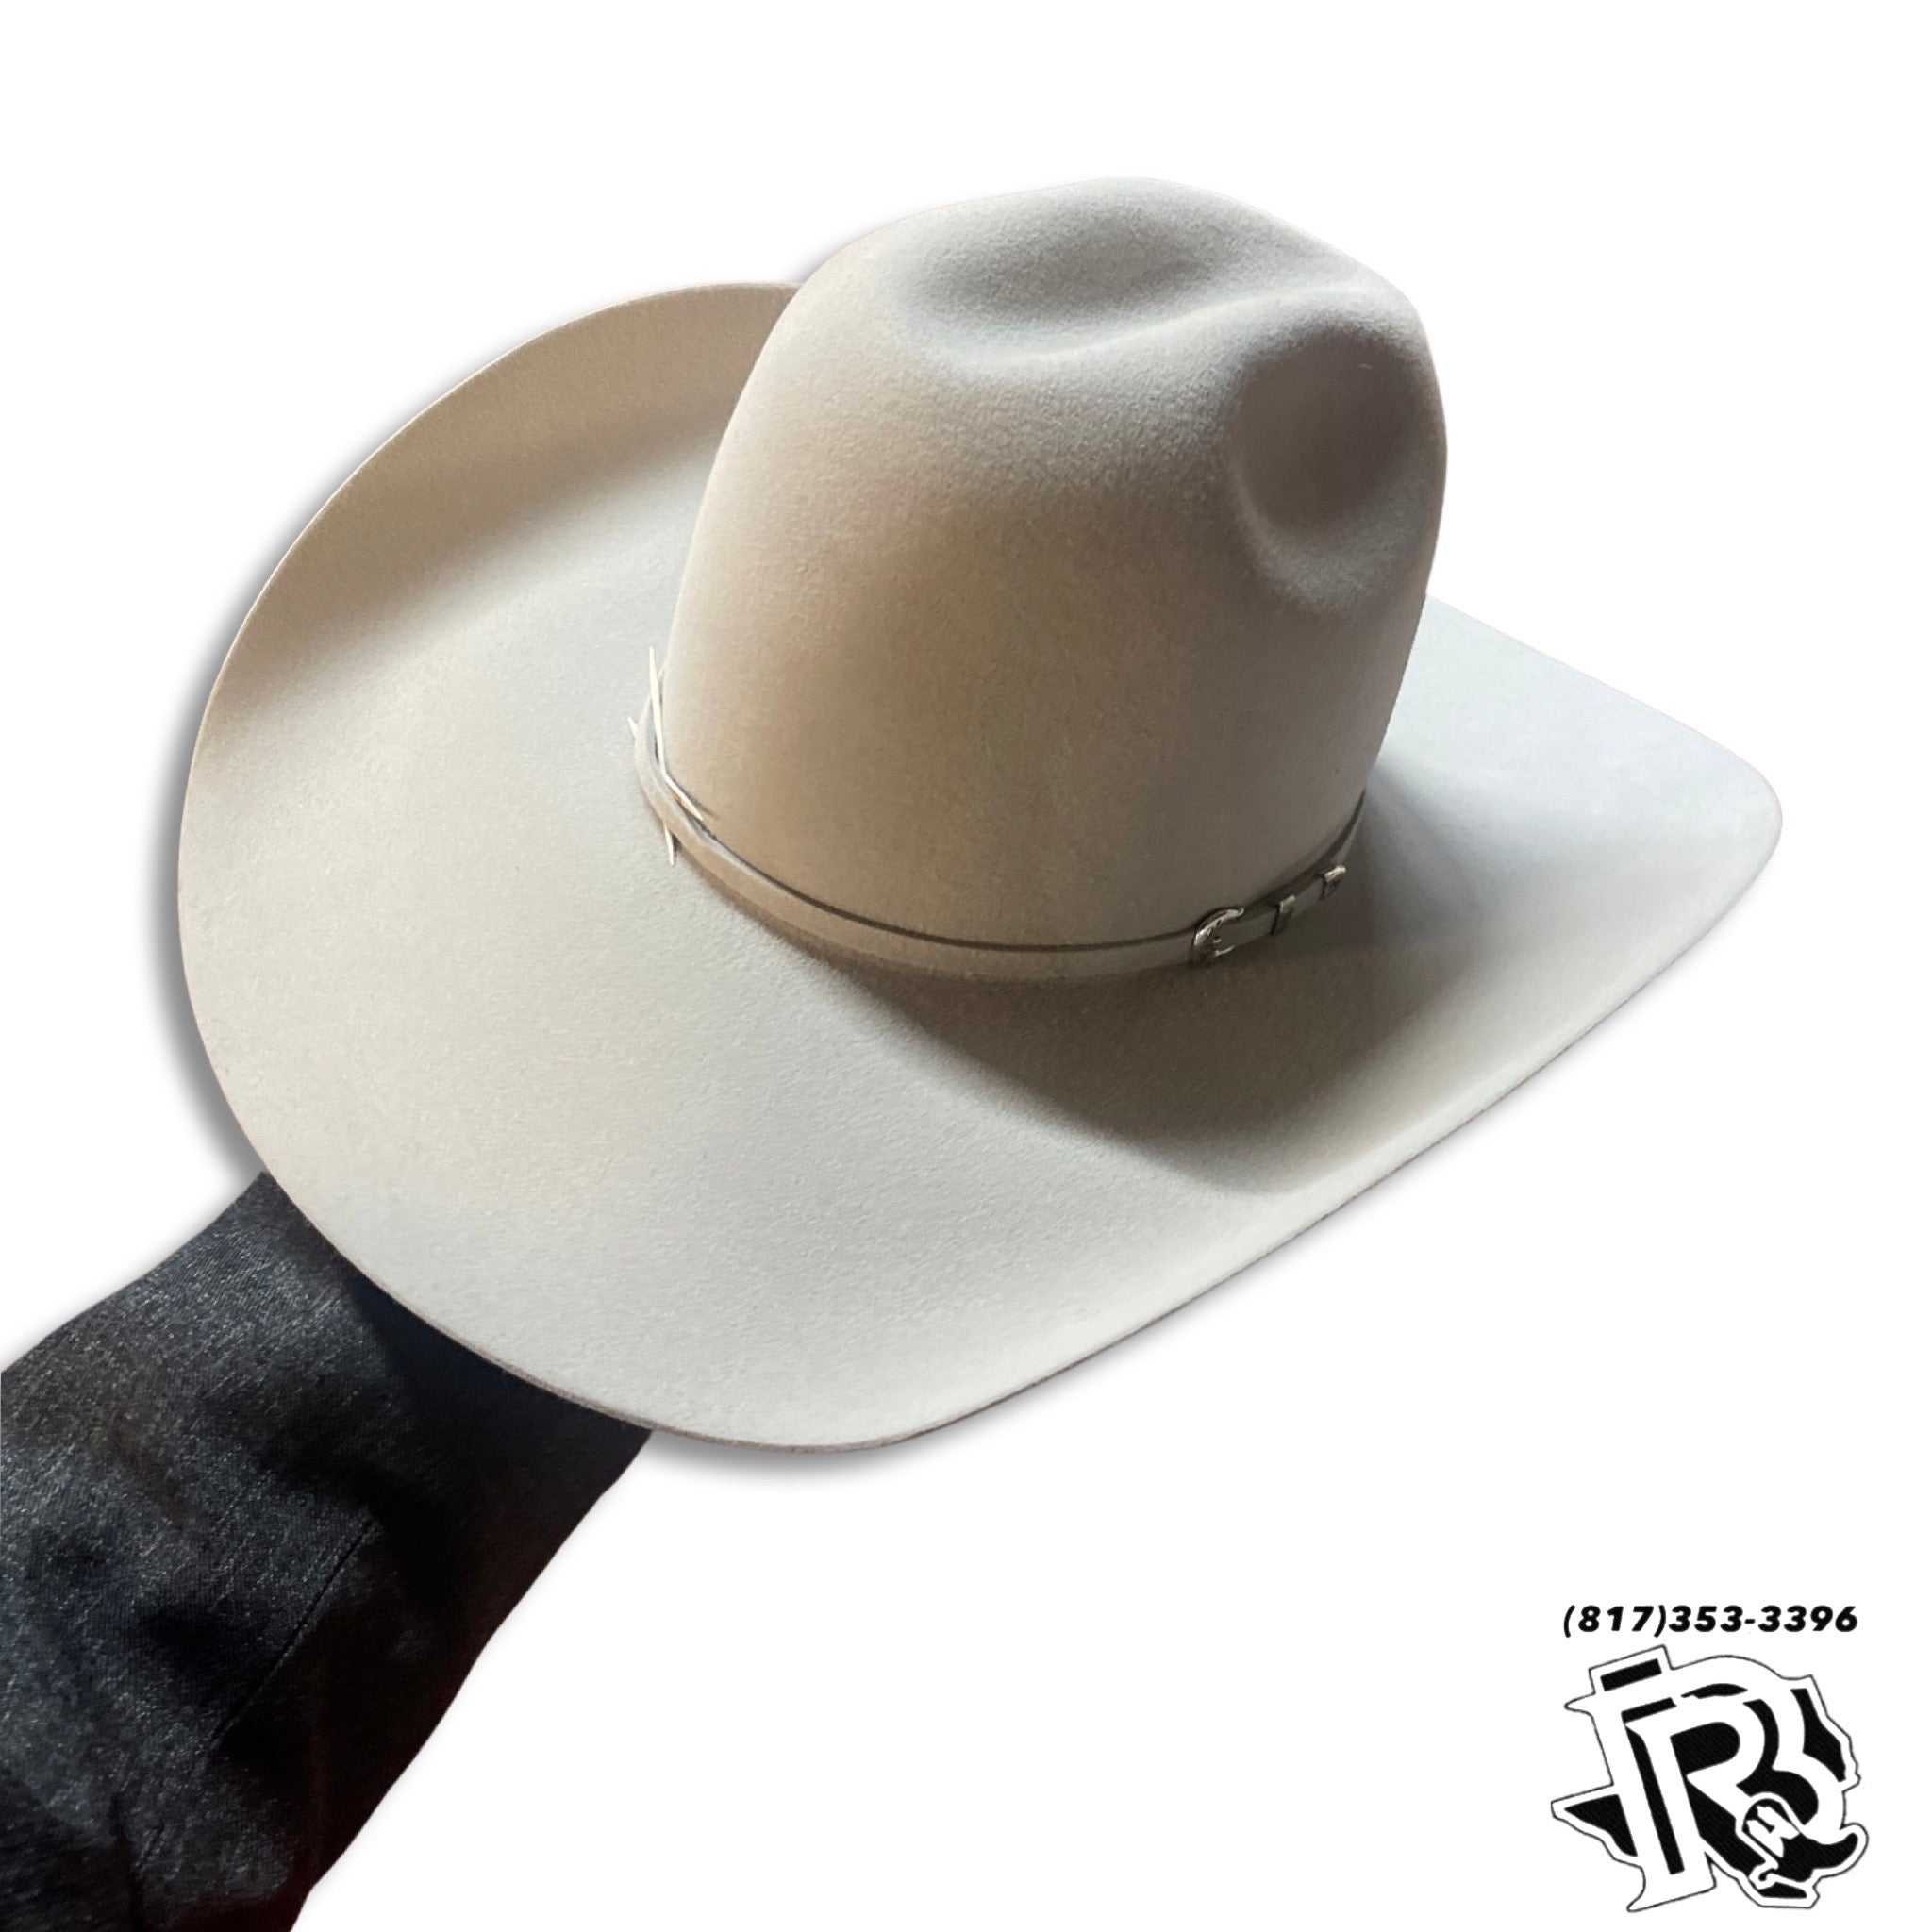 Stetson 10x Rodeo Straw Hat 7 1/8